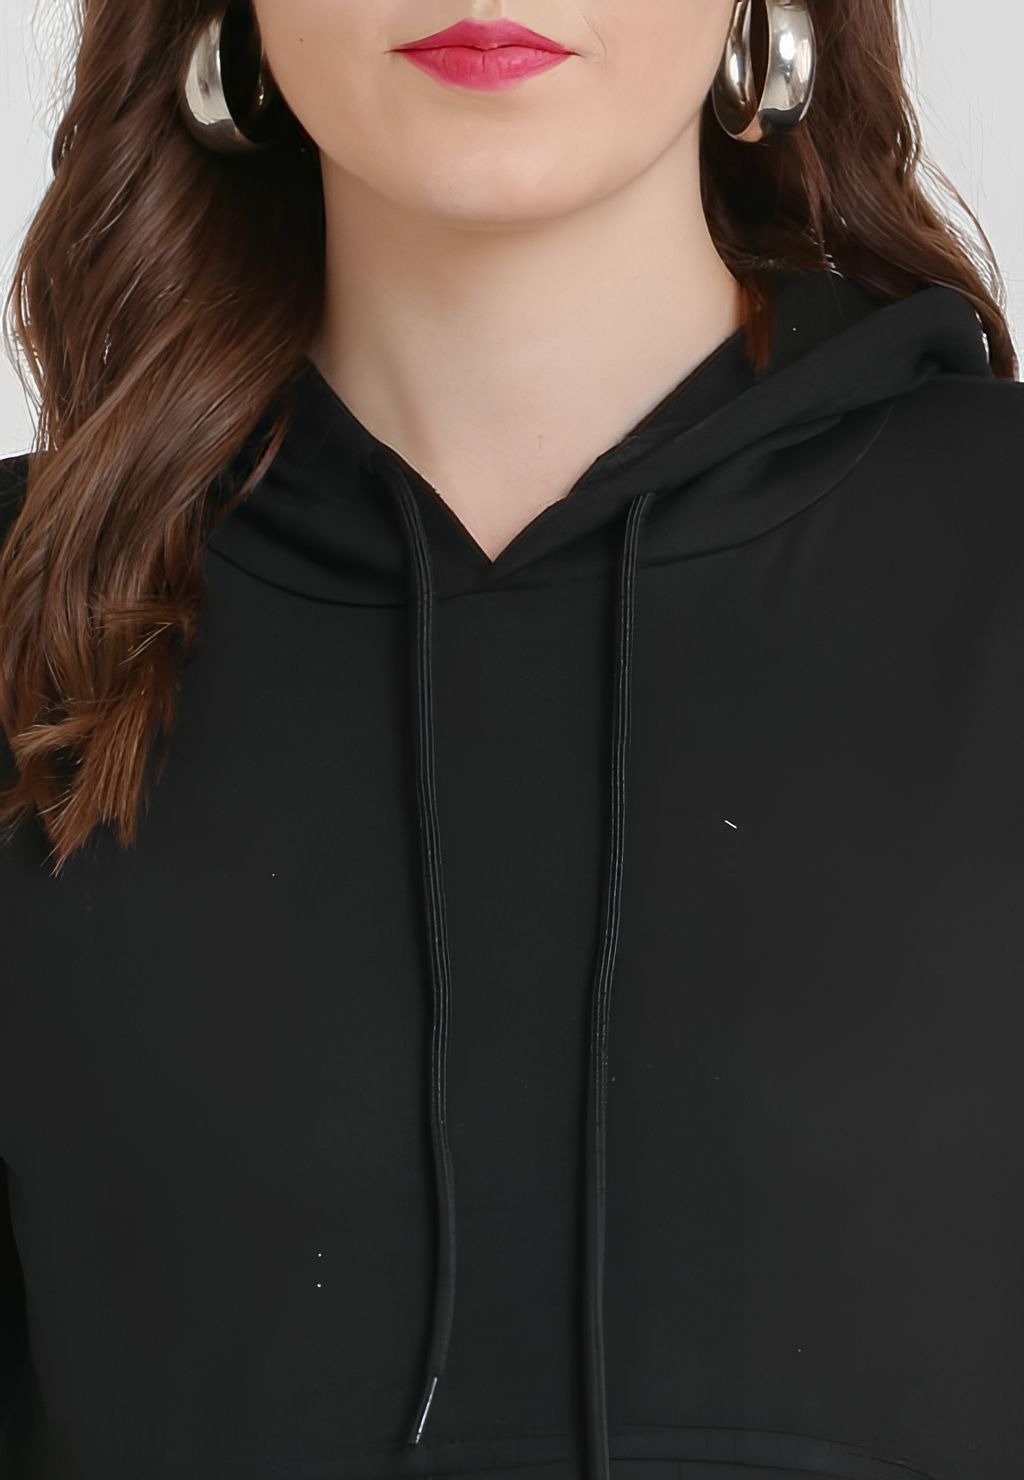 Cute Sweatshirt - Black, S, Free